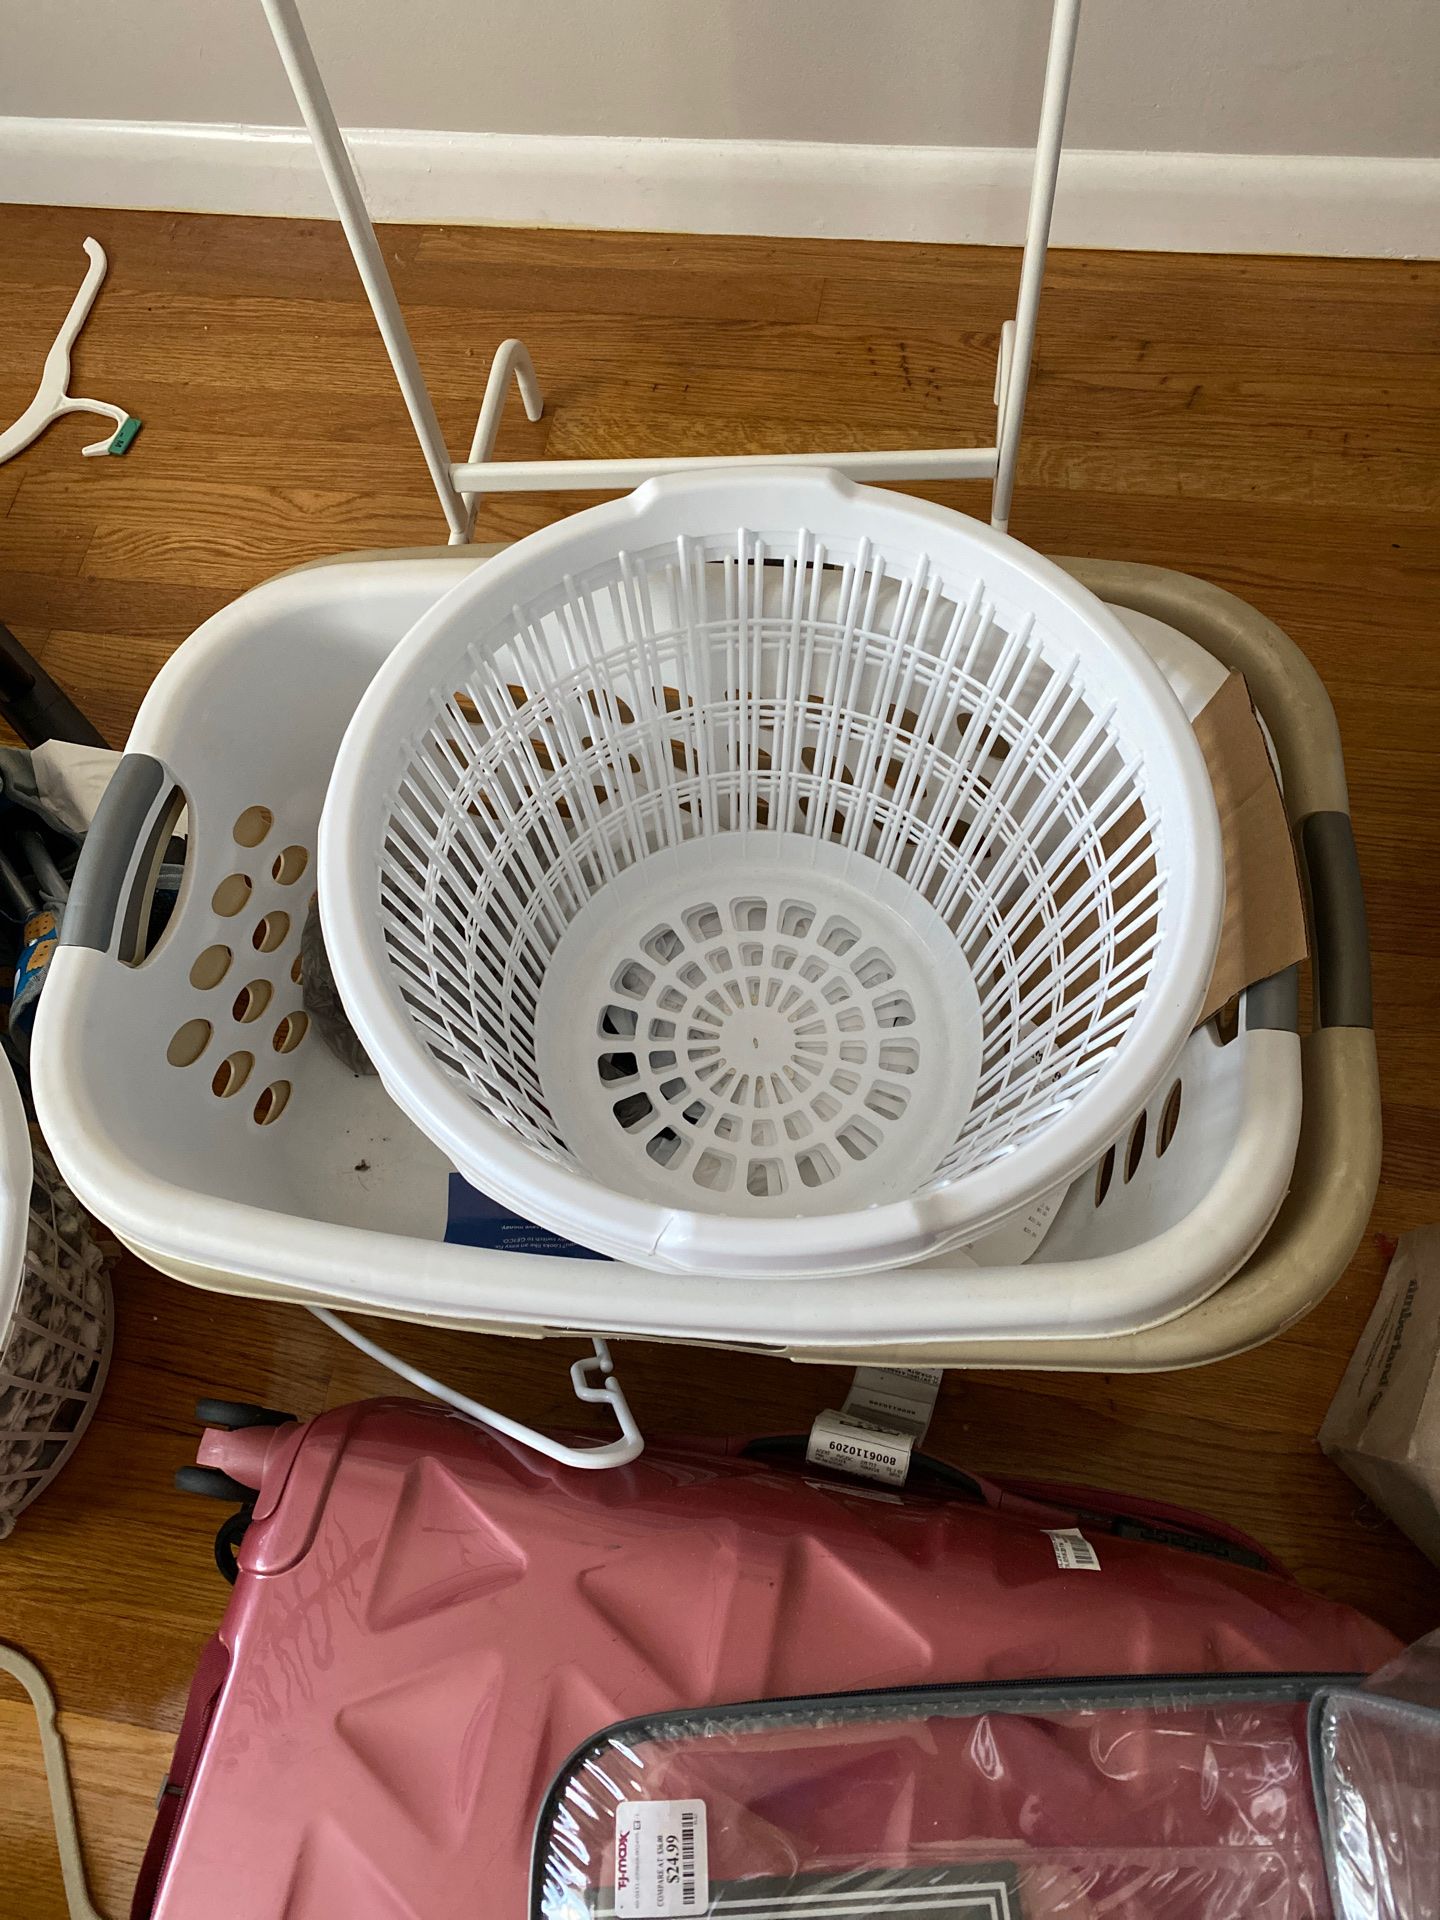 Laundry baskets